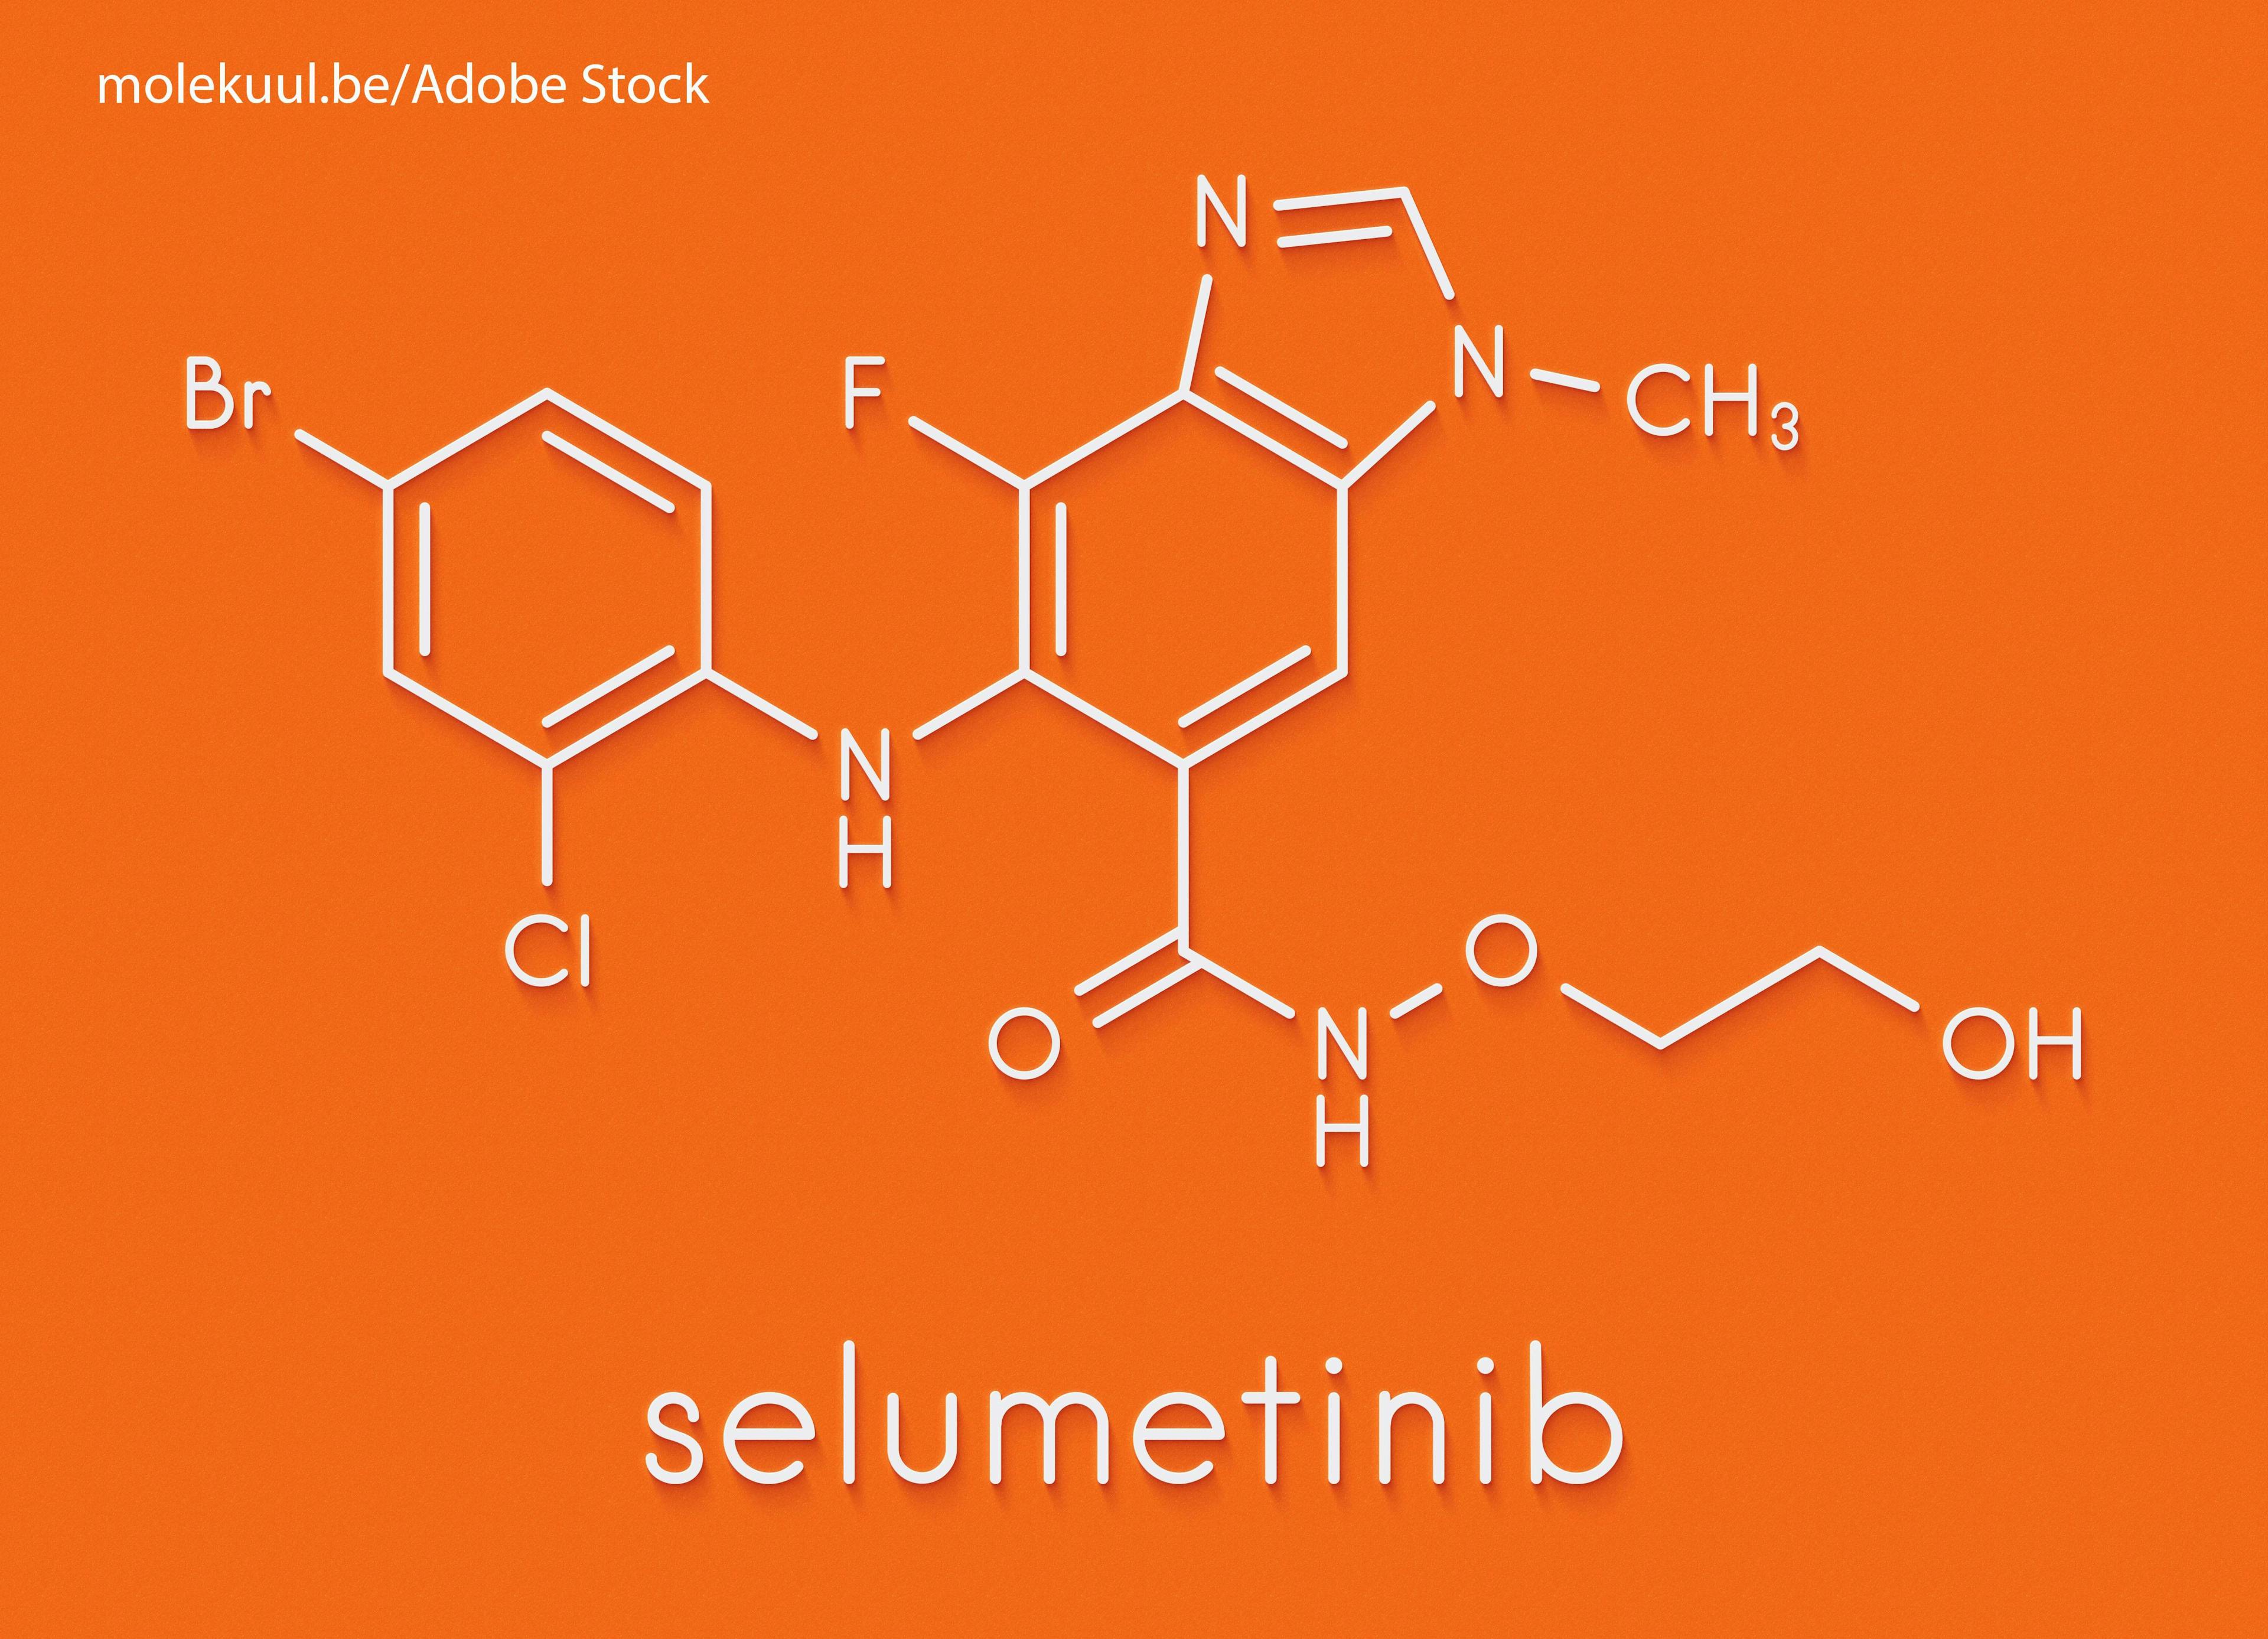 Selumetinib Clinically Improves NF1-Associated Neurofibromas